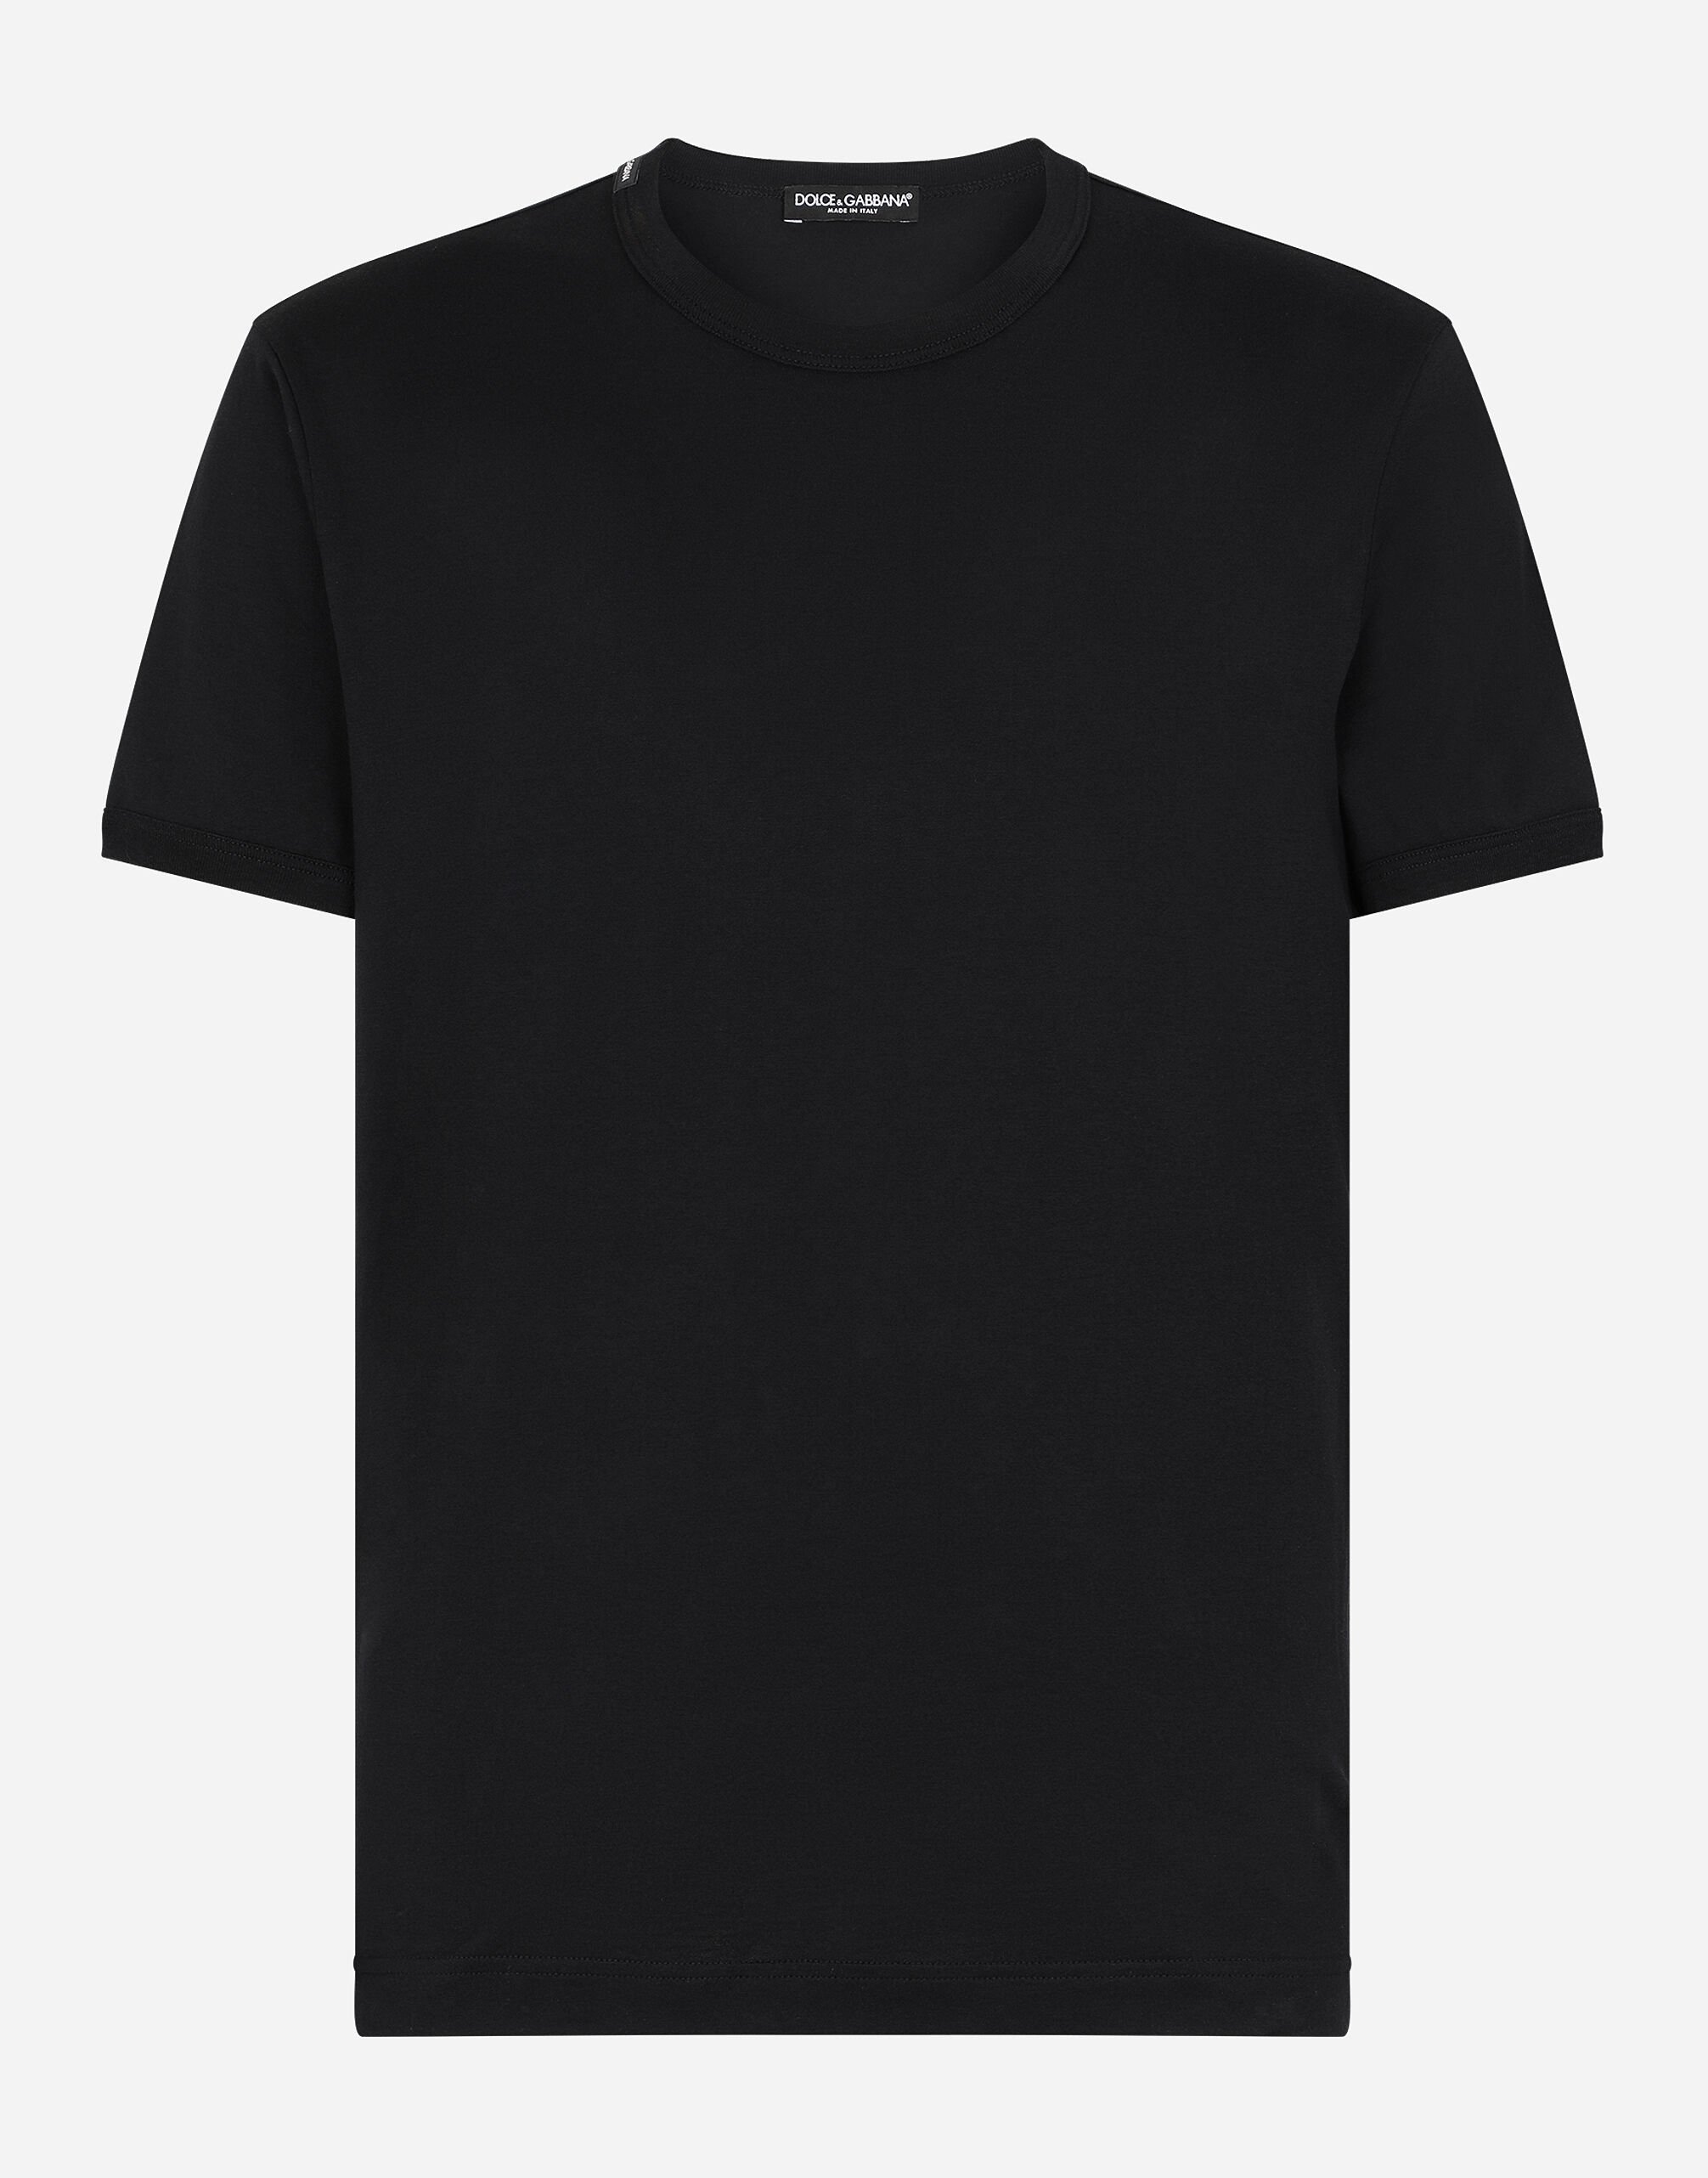 Dolce&Gabbana Cotton t-shirt with logo Black GY6IETFUFJR